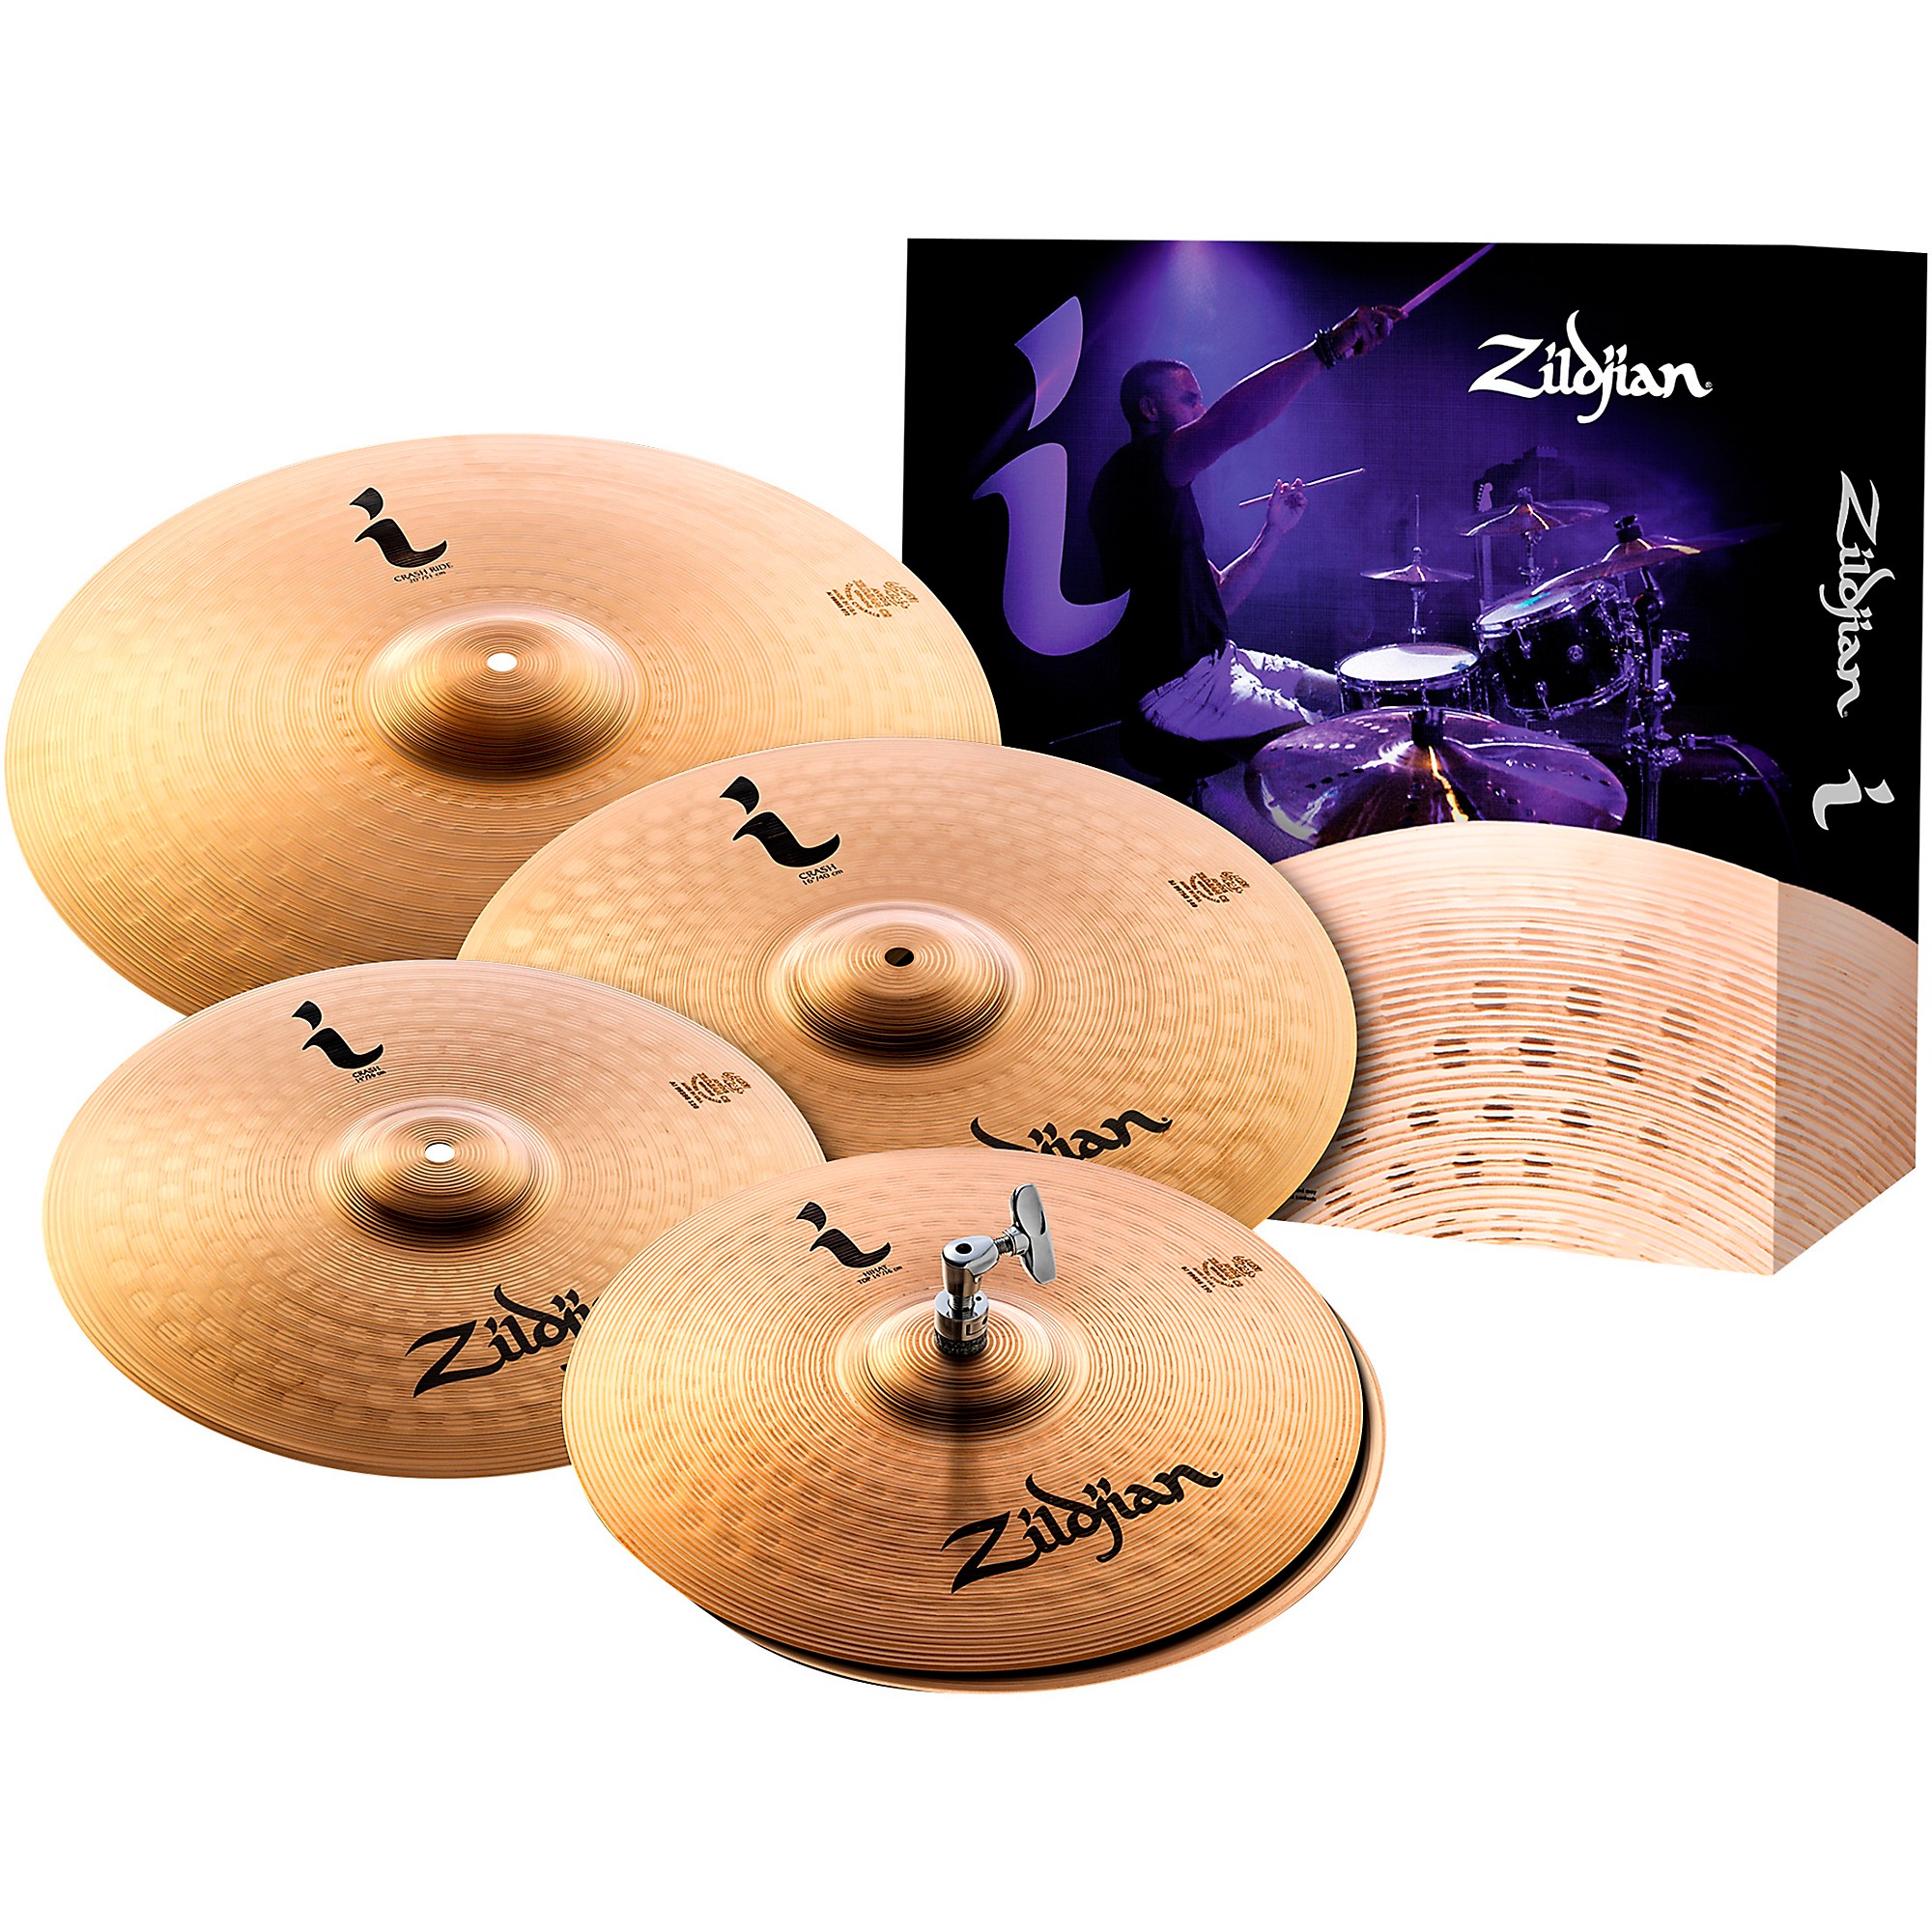 Zildjian I Series Pro Cymbal 5-Pack With Free 16